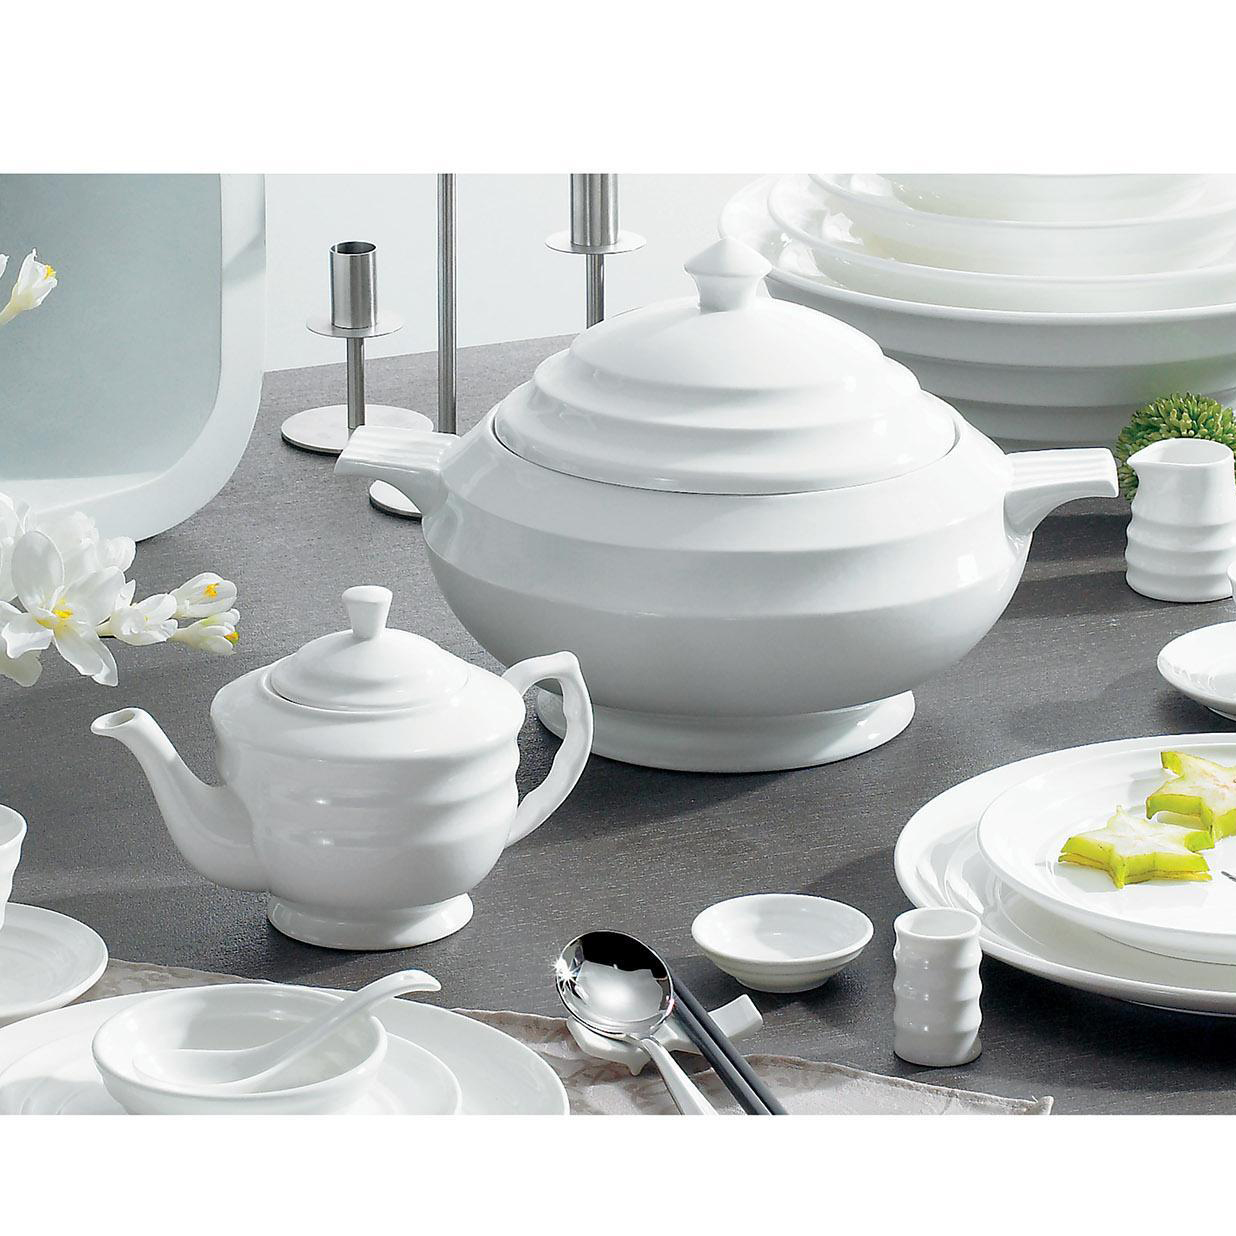 Modern dinnerware luxury wide side soup plate porcelain bone china tableware european dishwasher safe